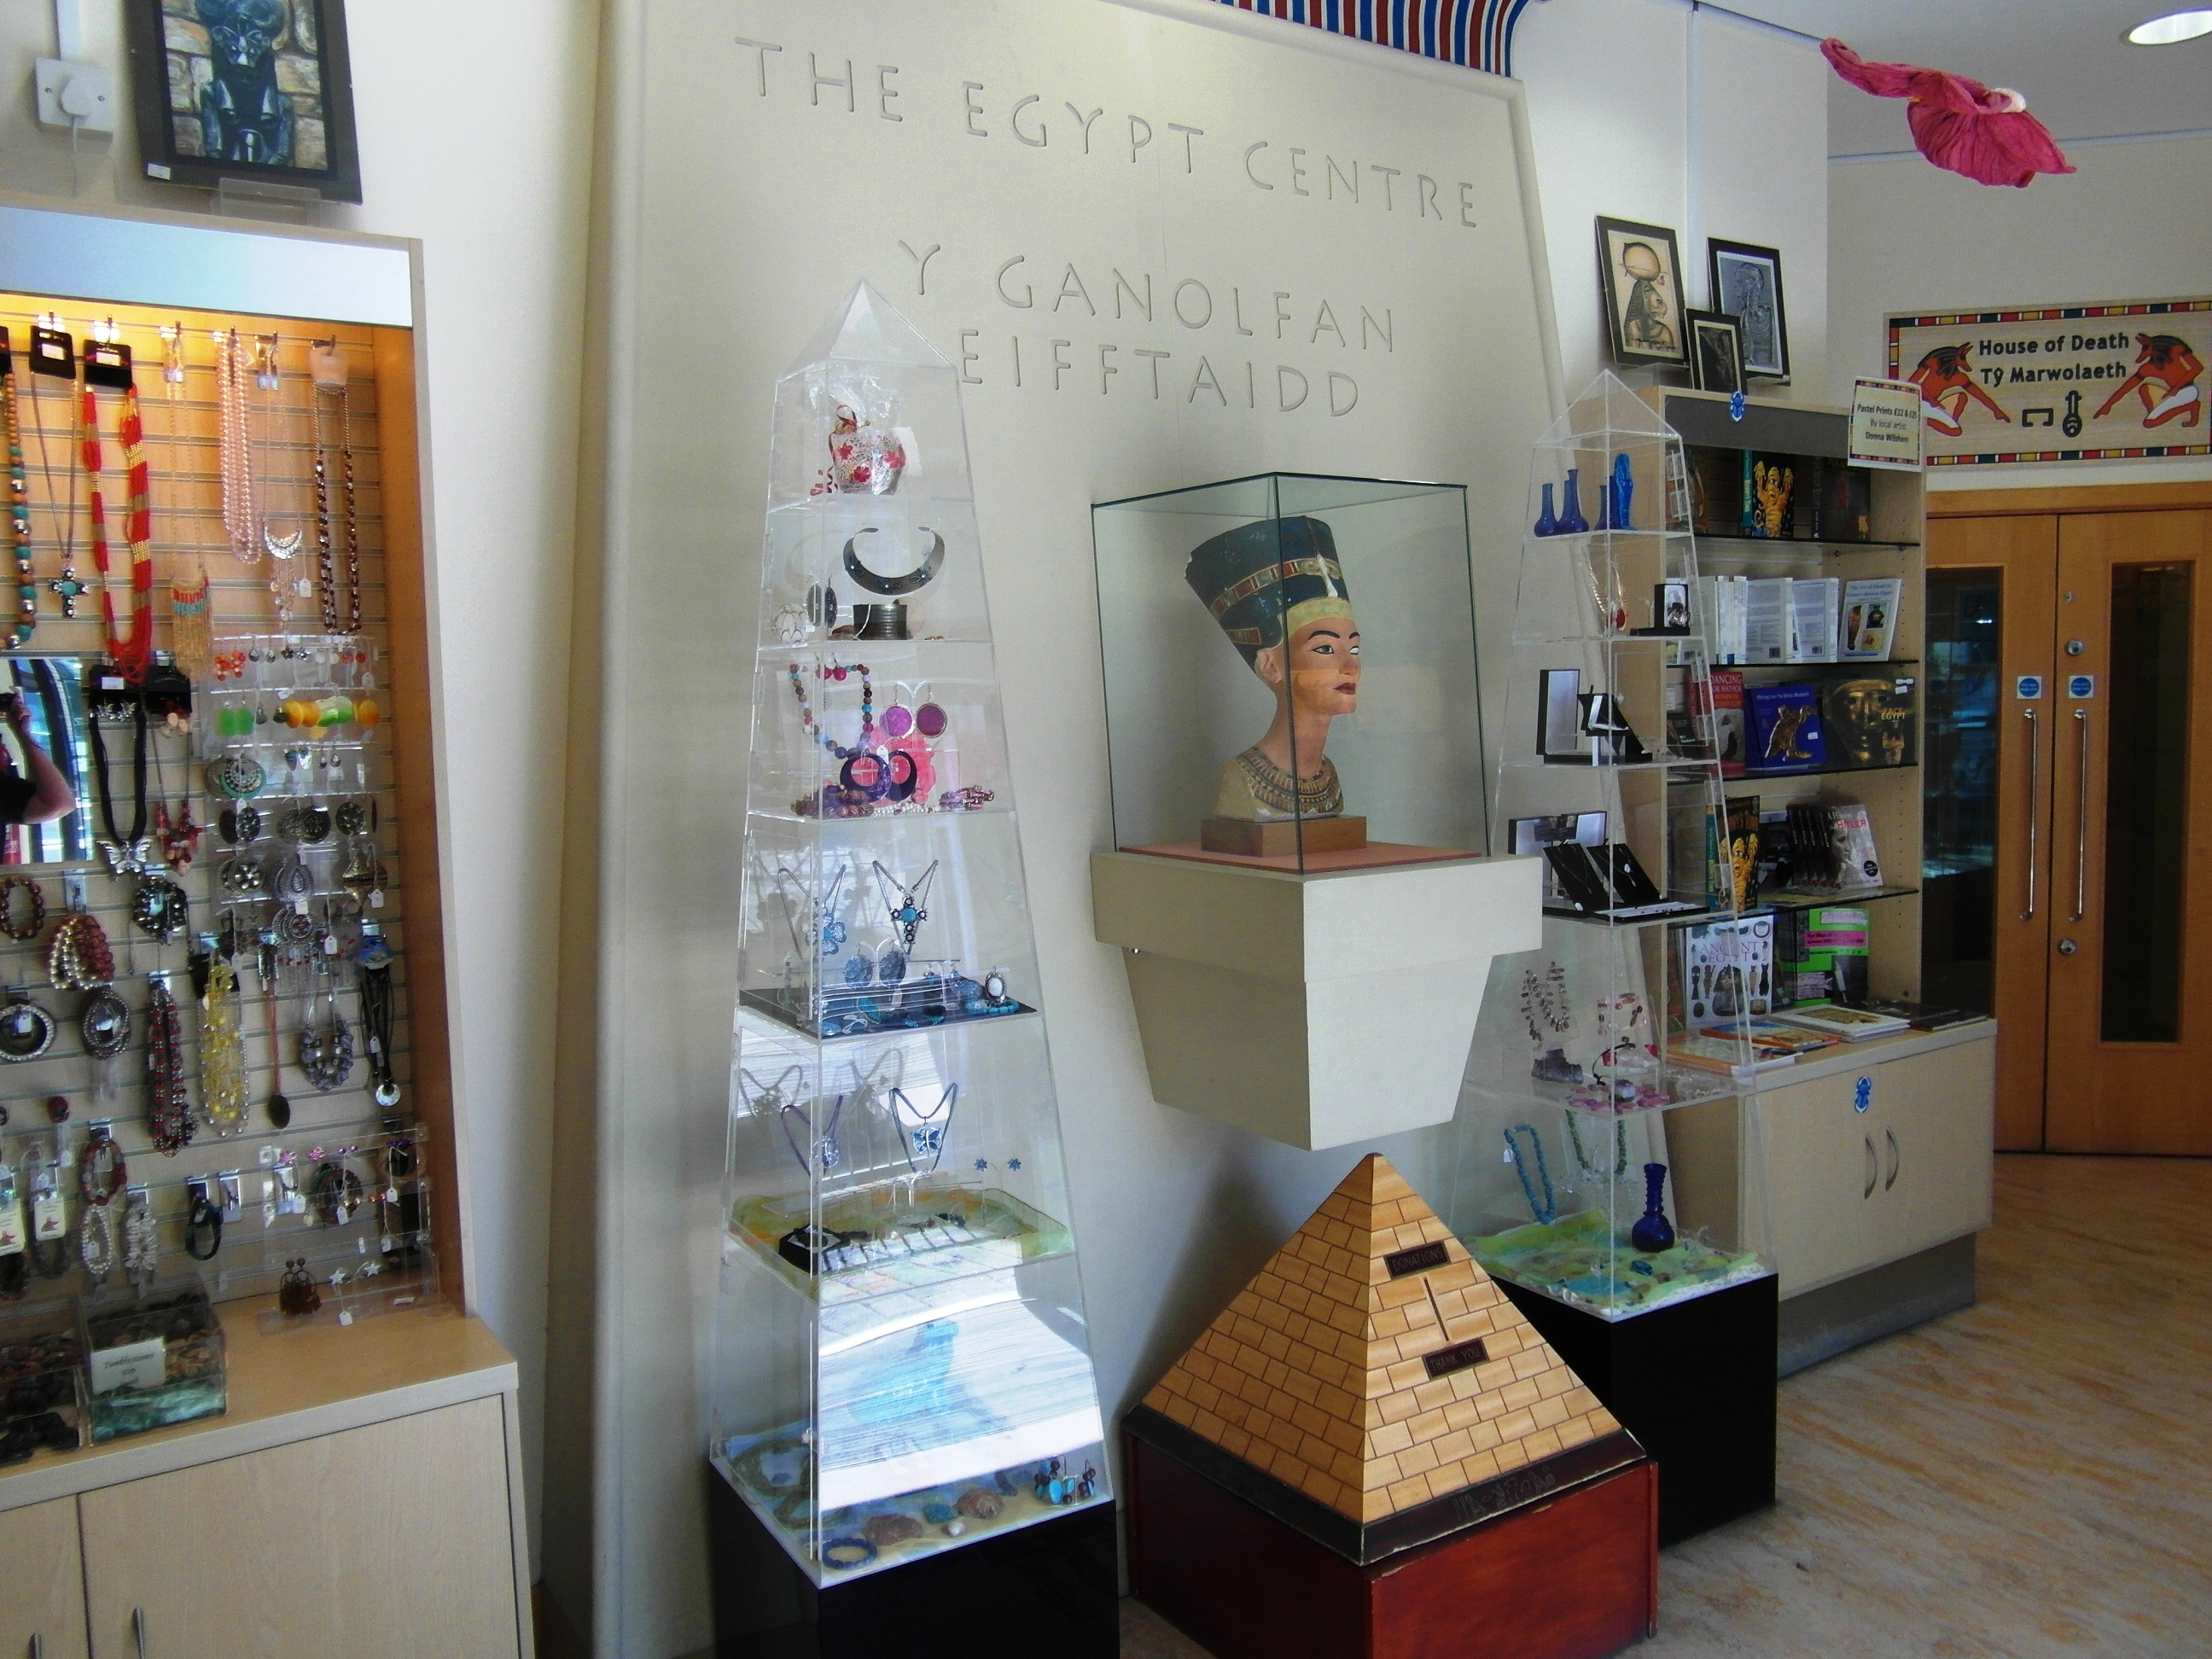  The Egypt Centre